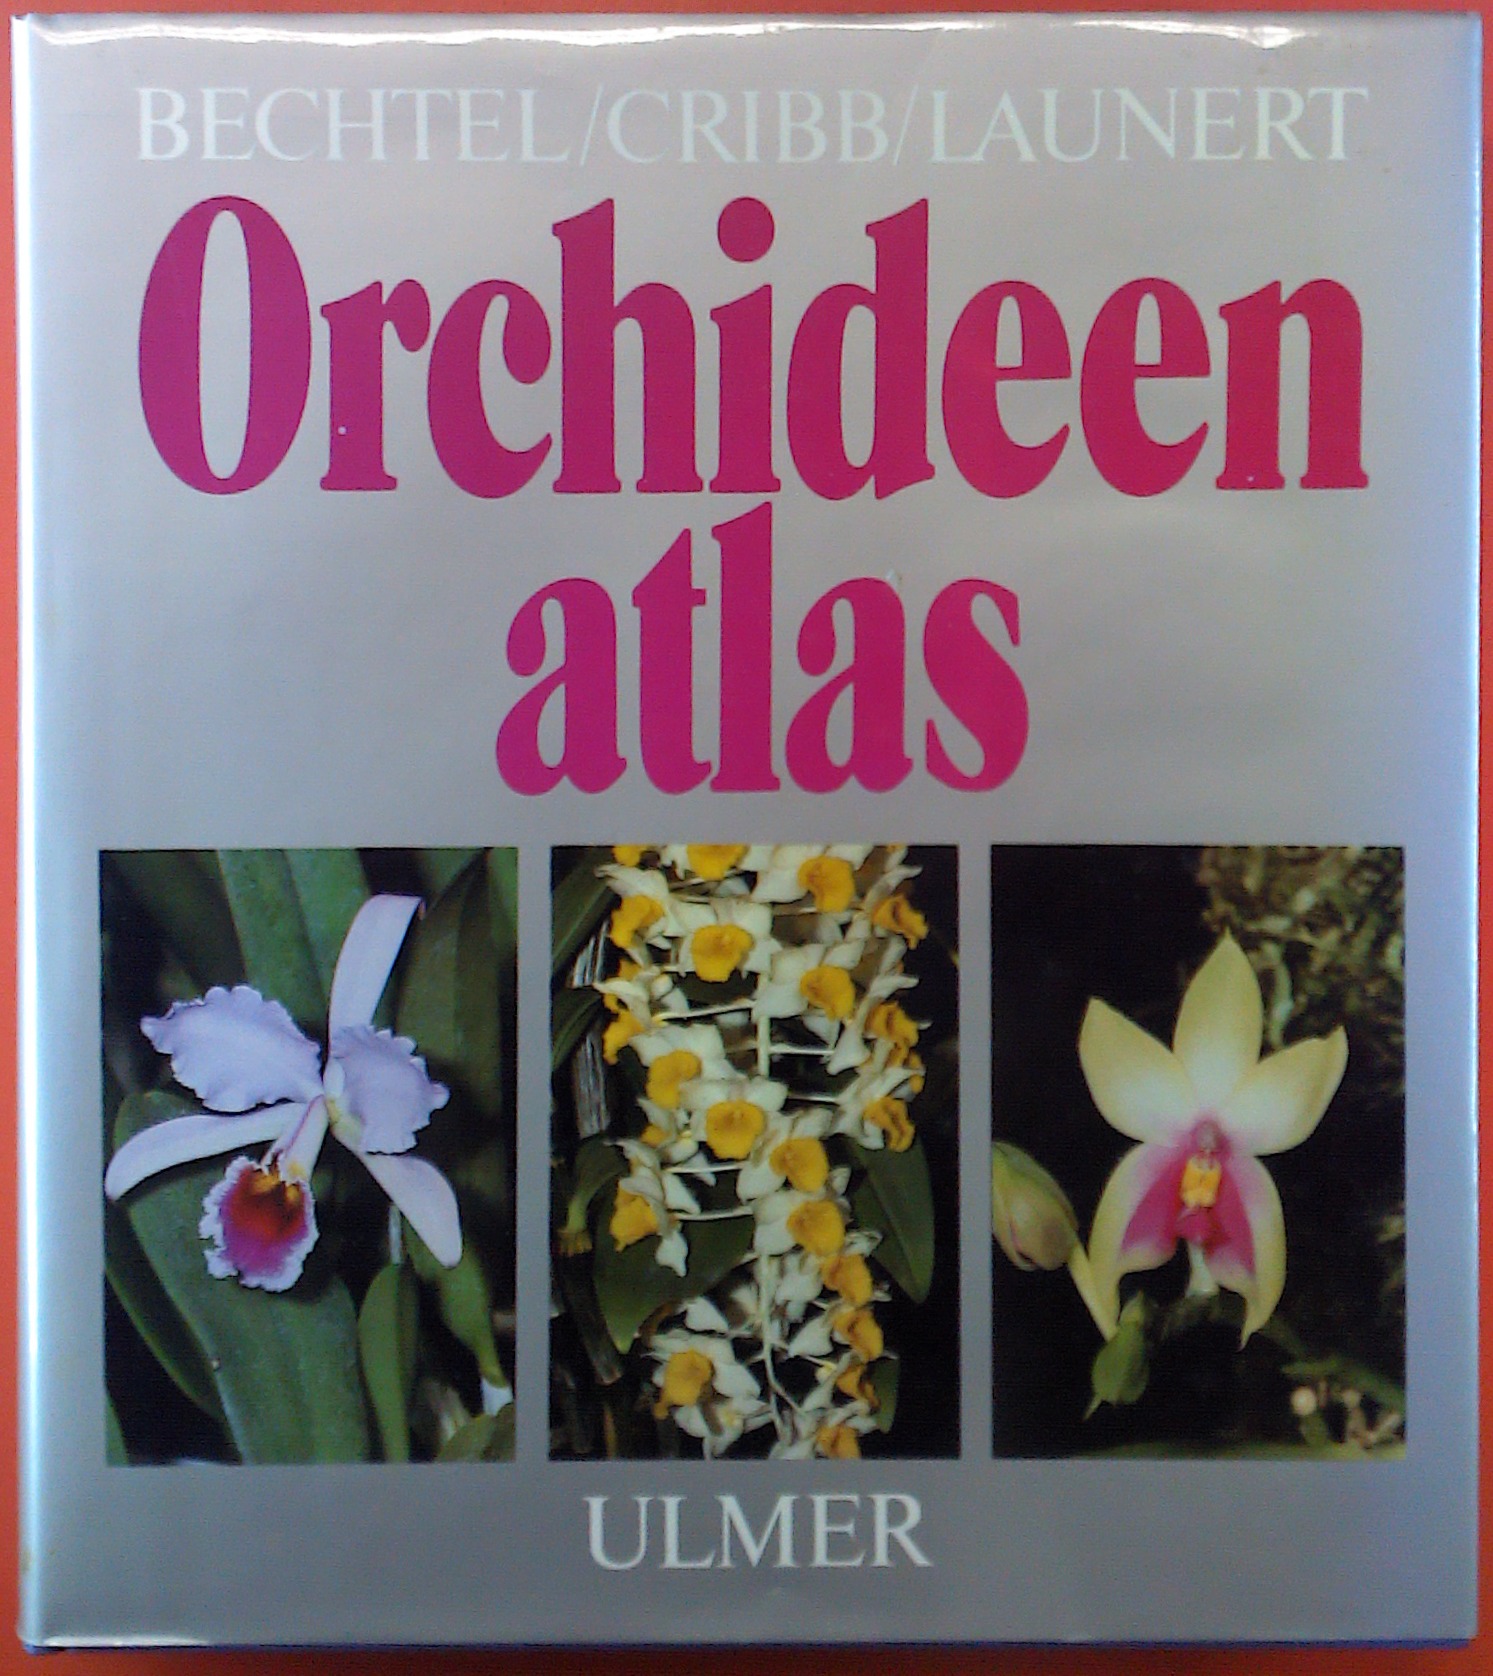 Orchideenatlas, Die Kulturorchideen, Lexikon der wichtigsten Gattungen und Arten - Bechtel/Cribb/Launert